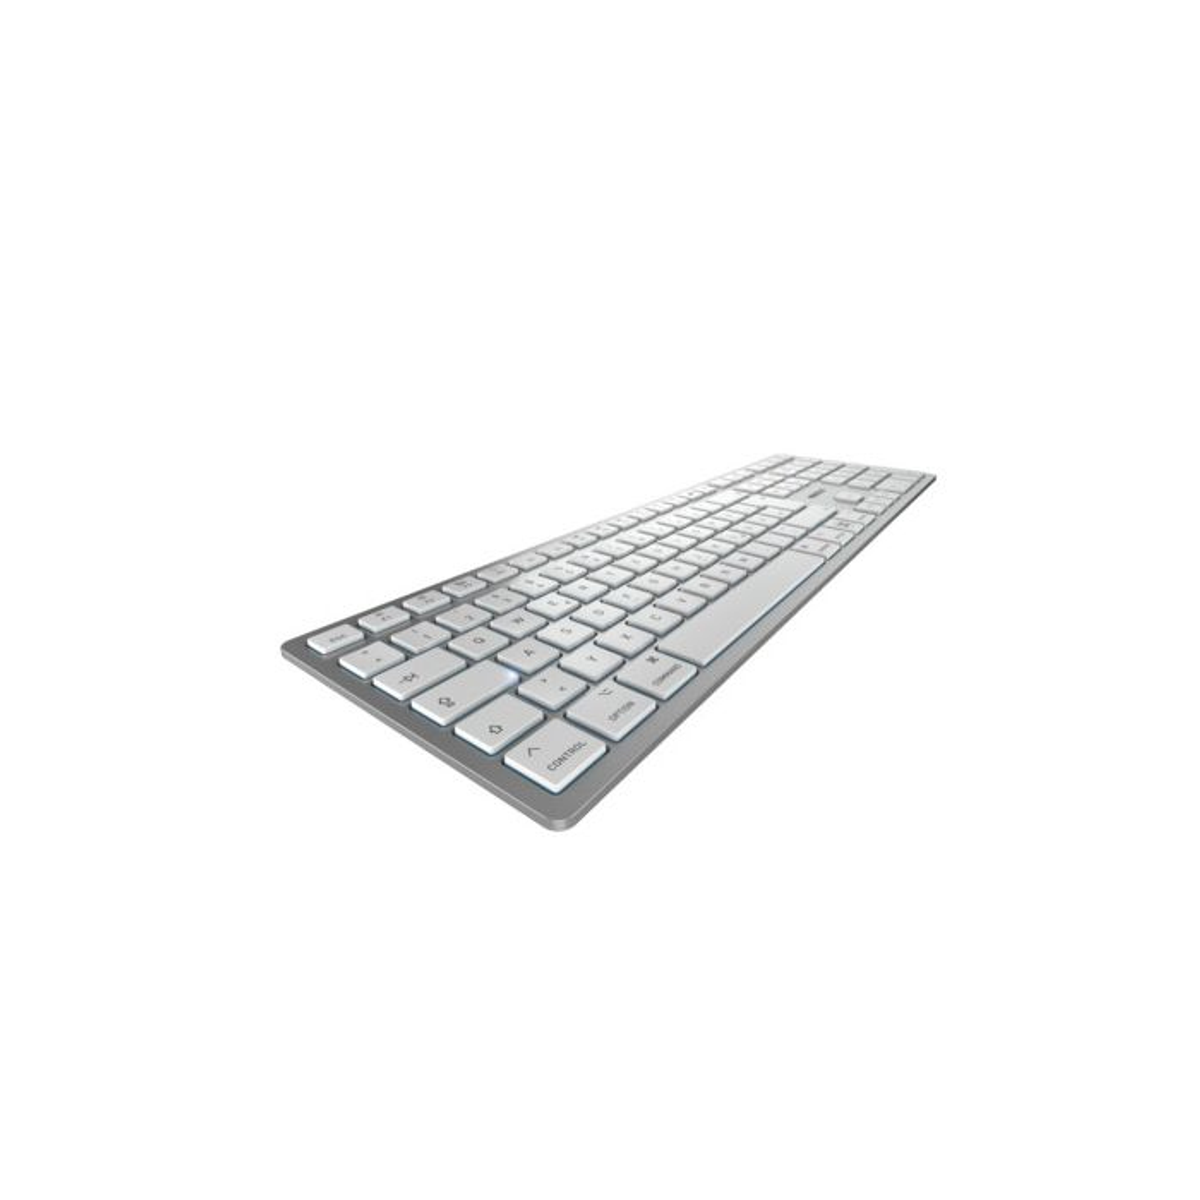 CHERRY JK-9110US-1, Tastatur